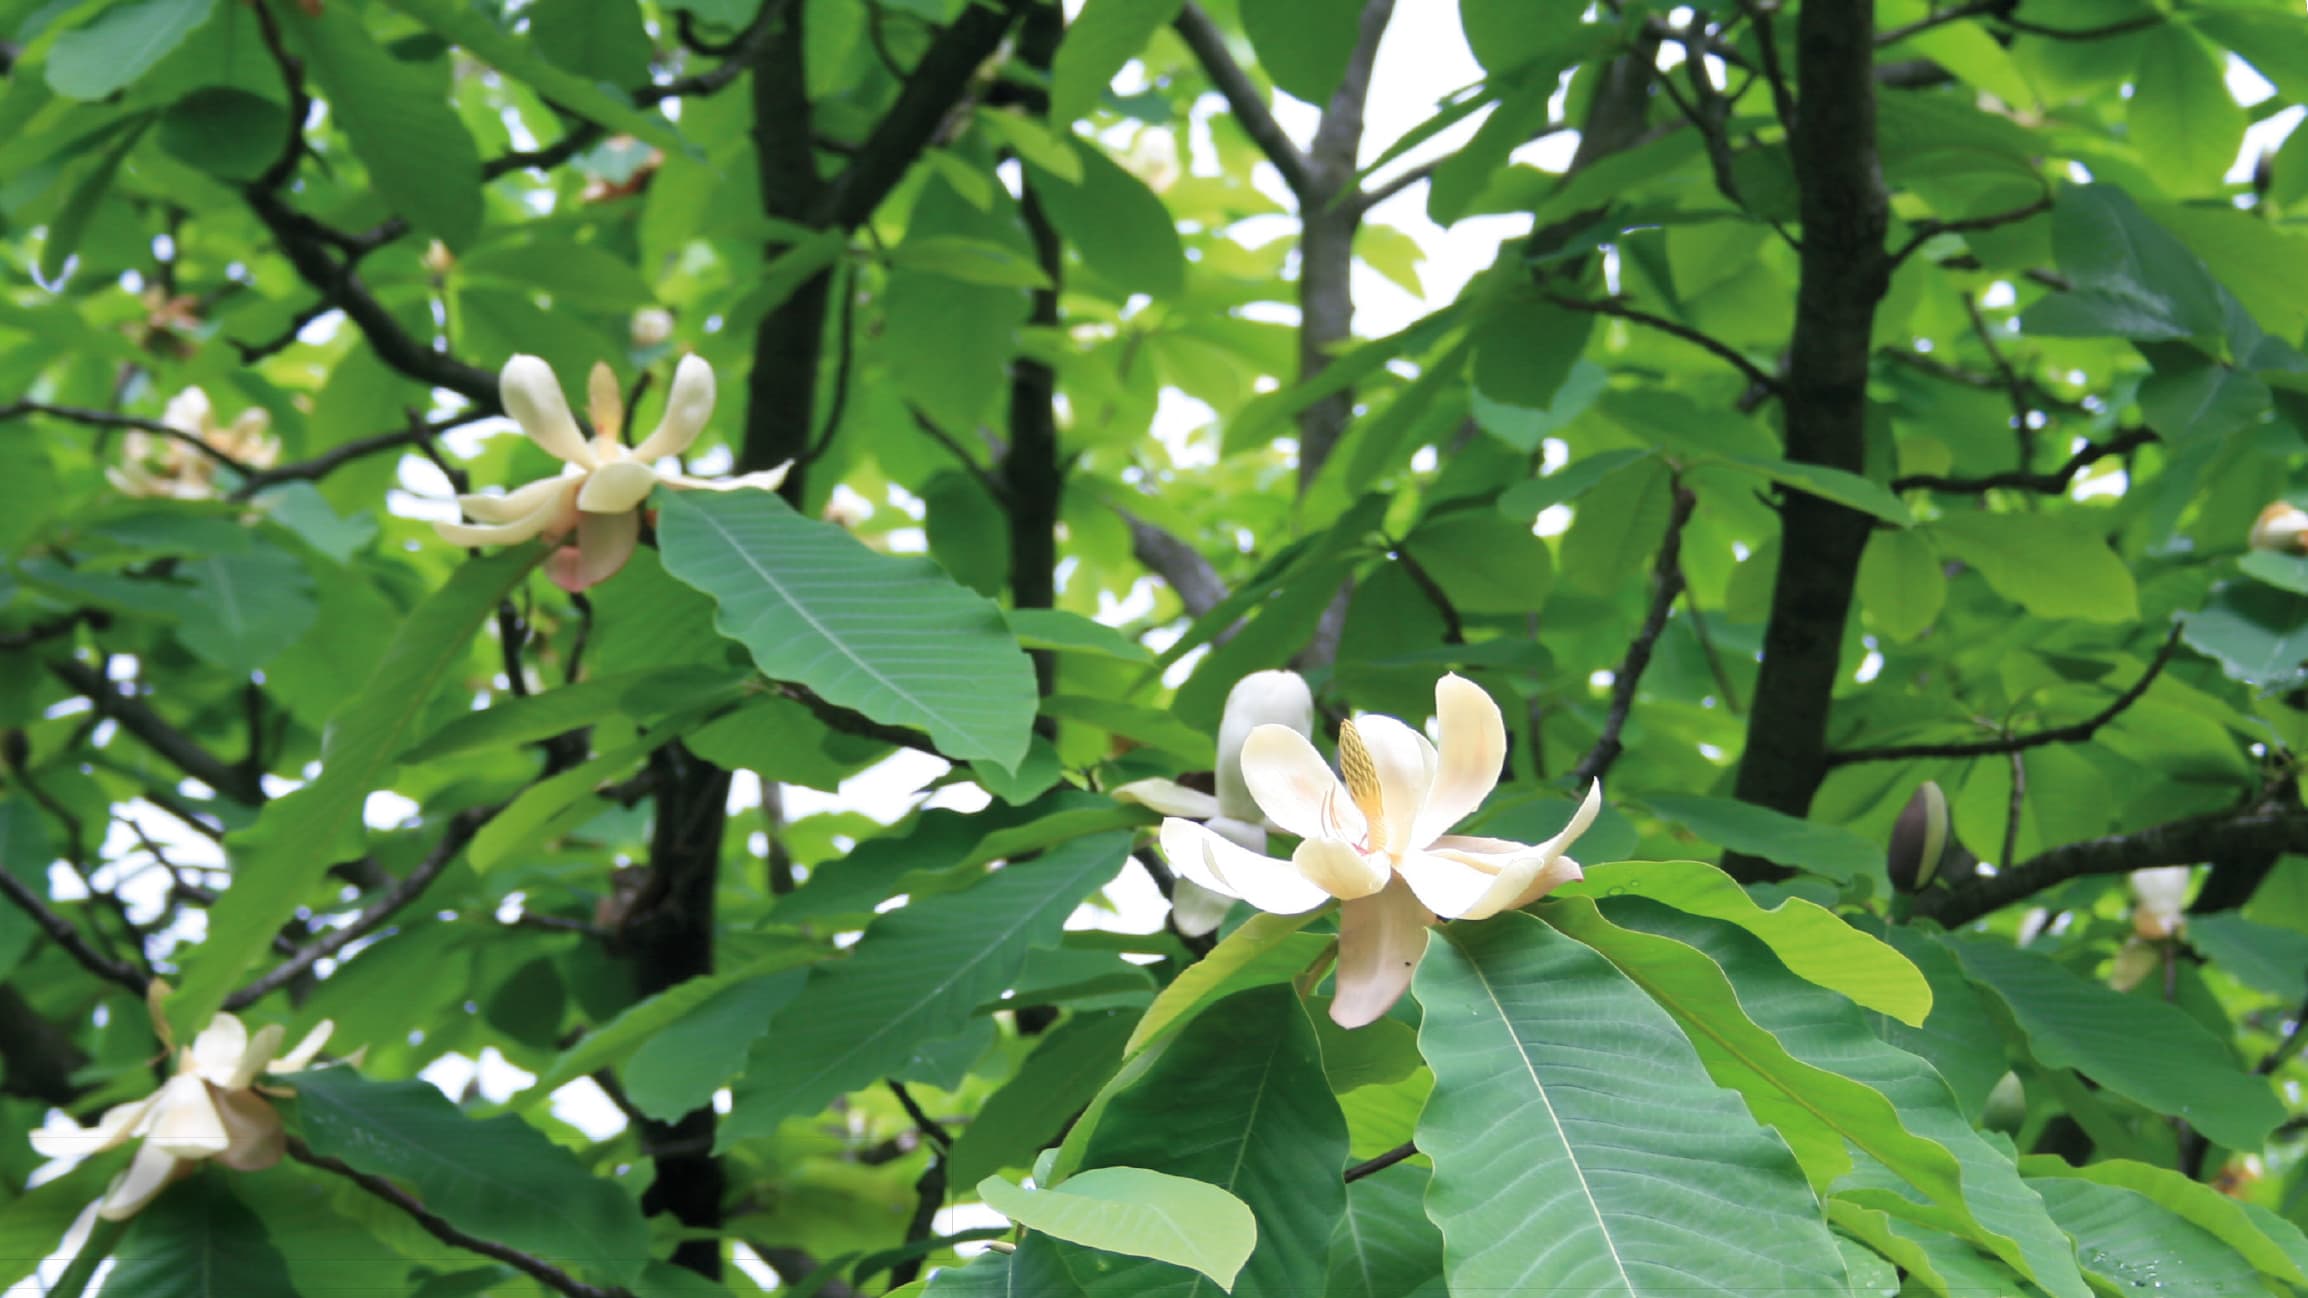 Japanese bigleaf magnolia (Magnolia obovata)